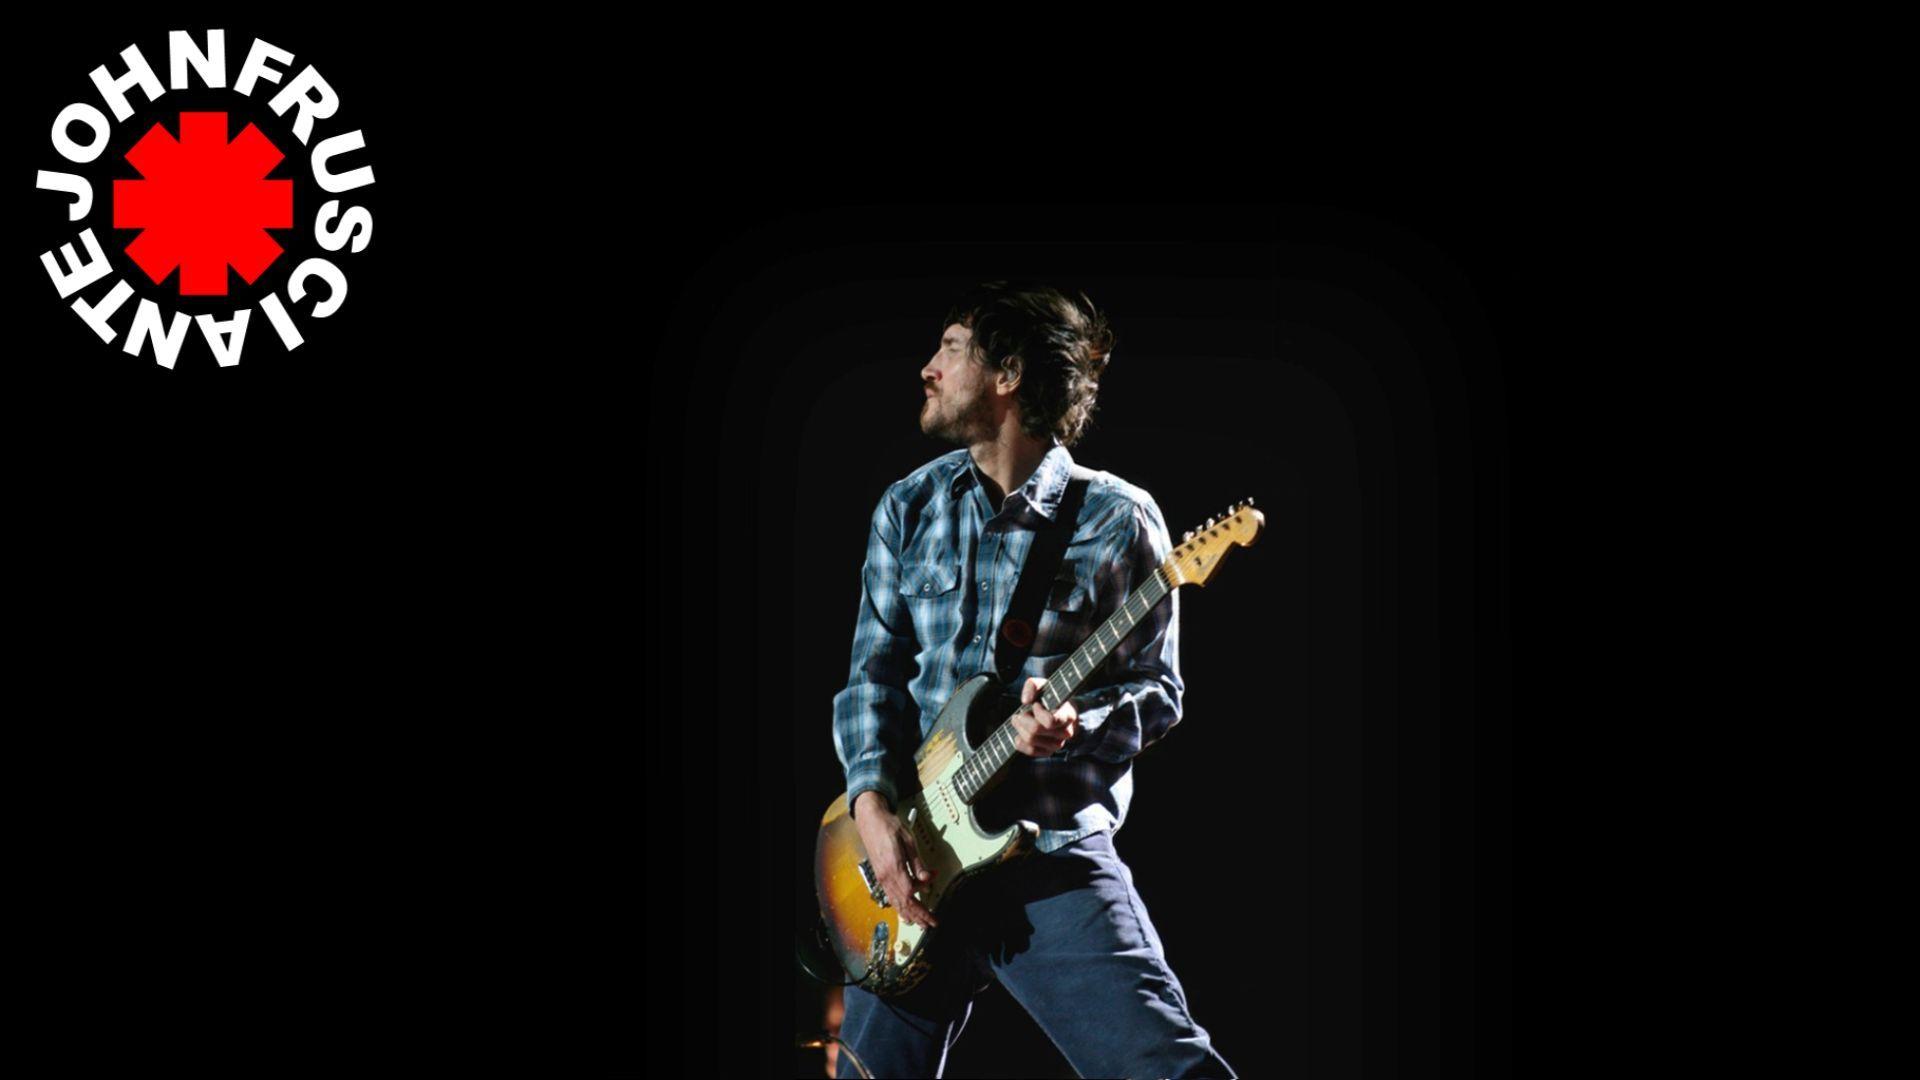 John Frusciante Full HD Wallpaper and Backgroundx1080